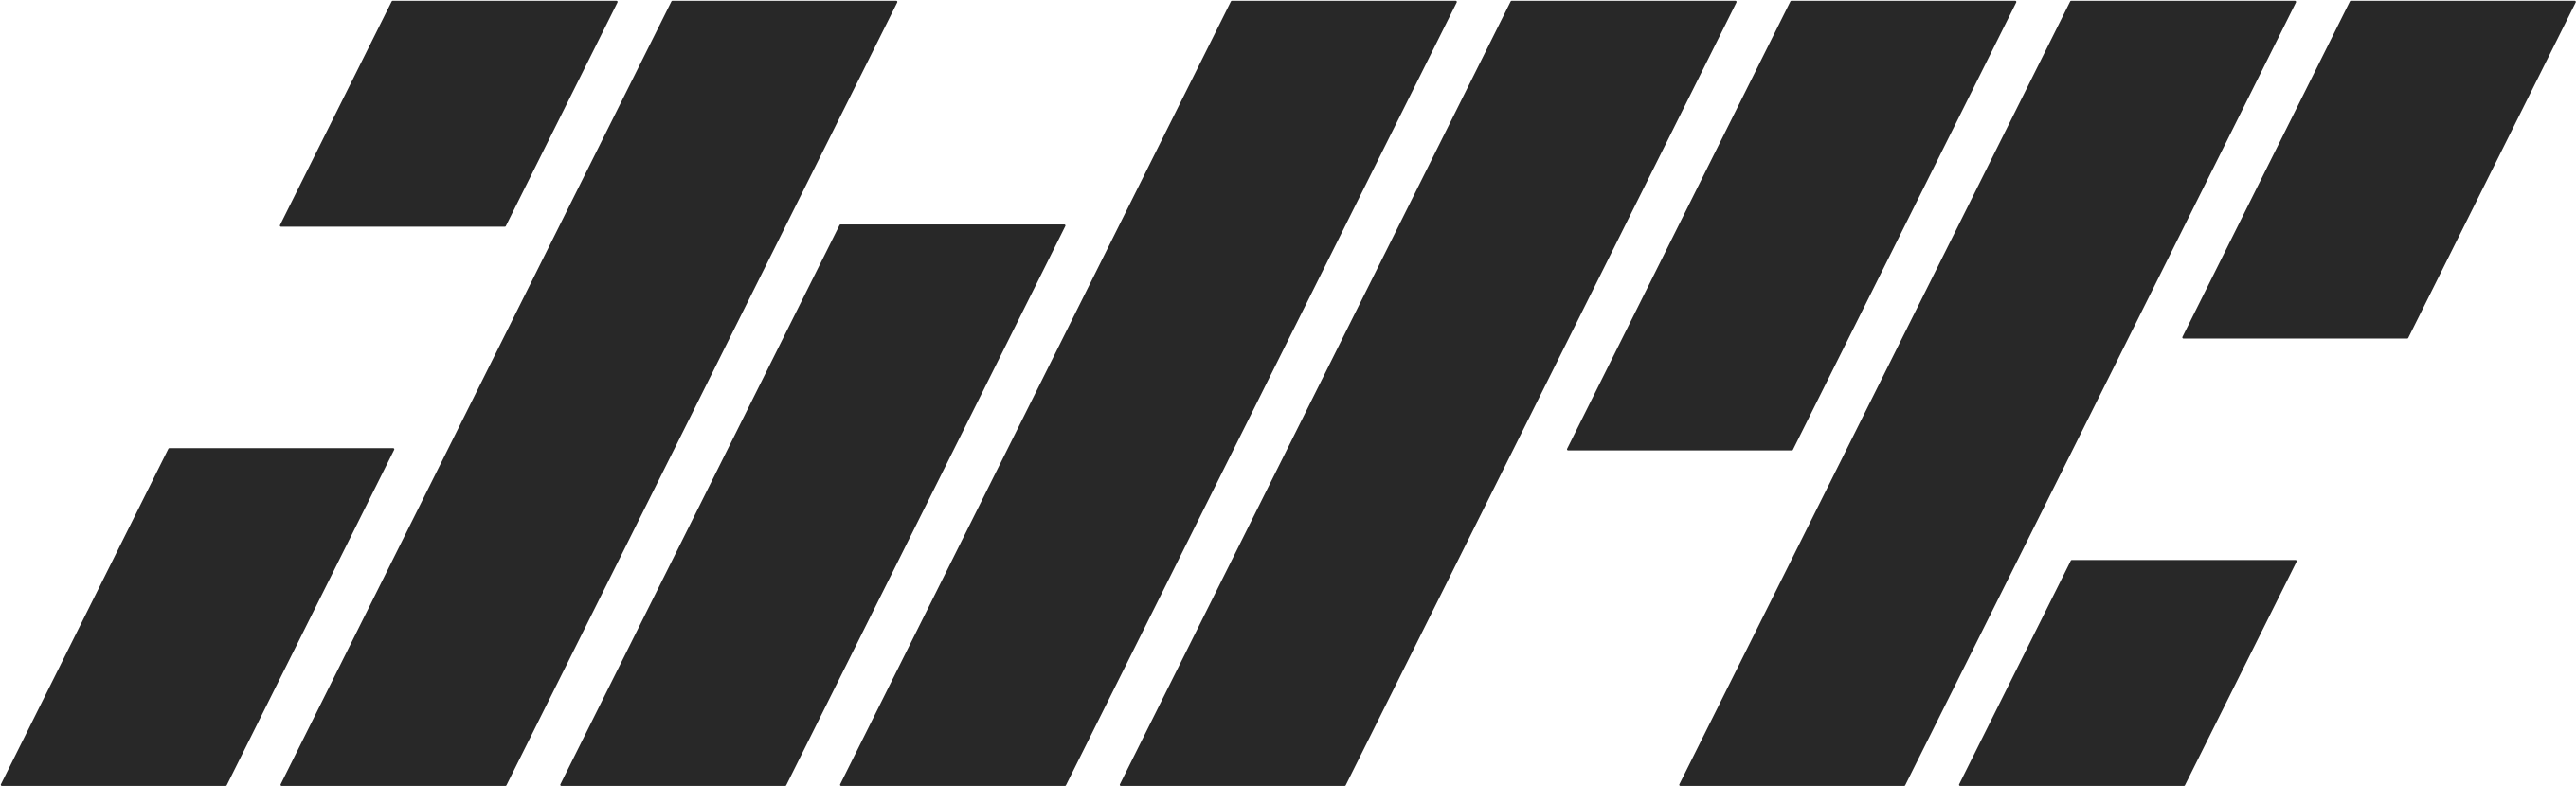 annandadewapp's logo